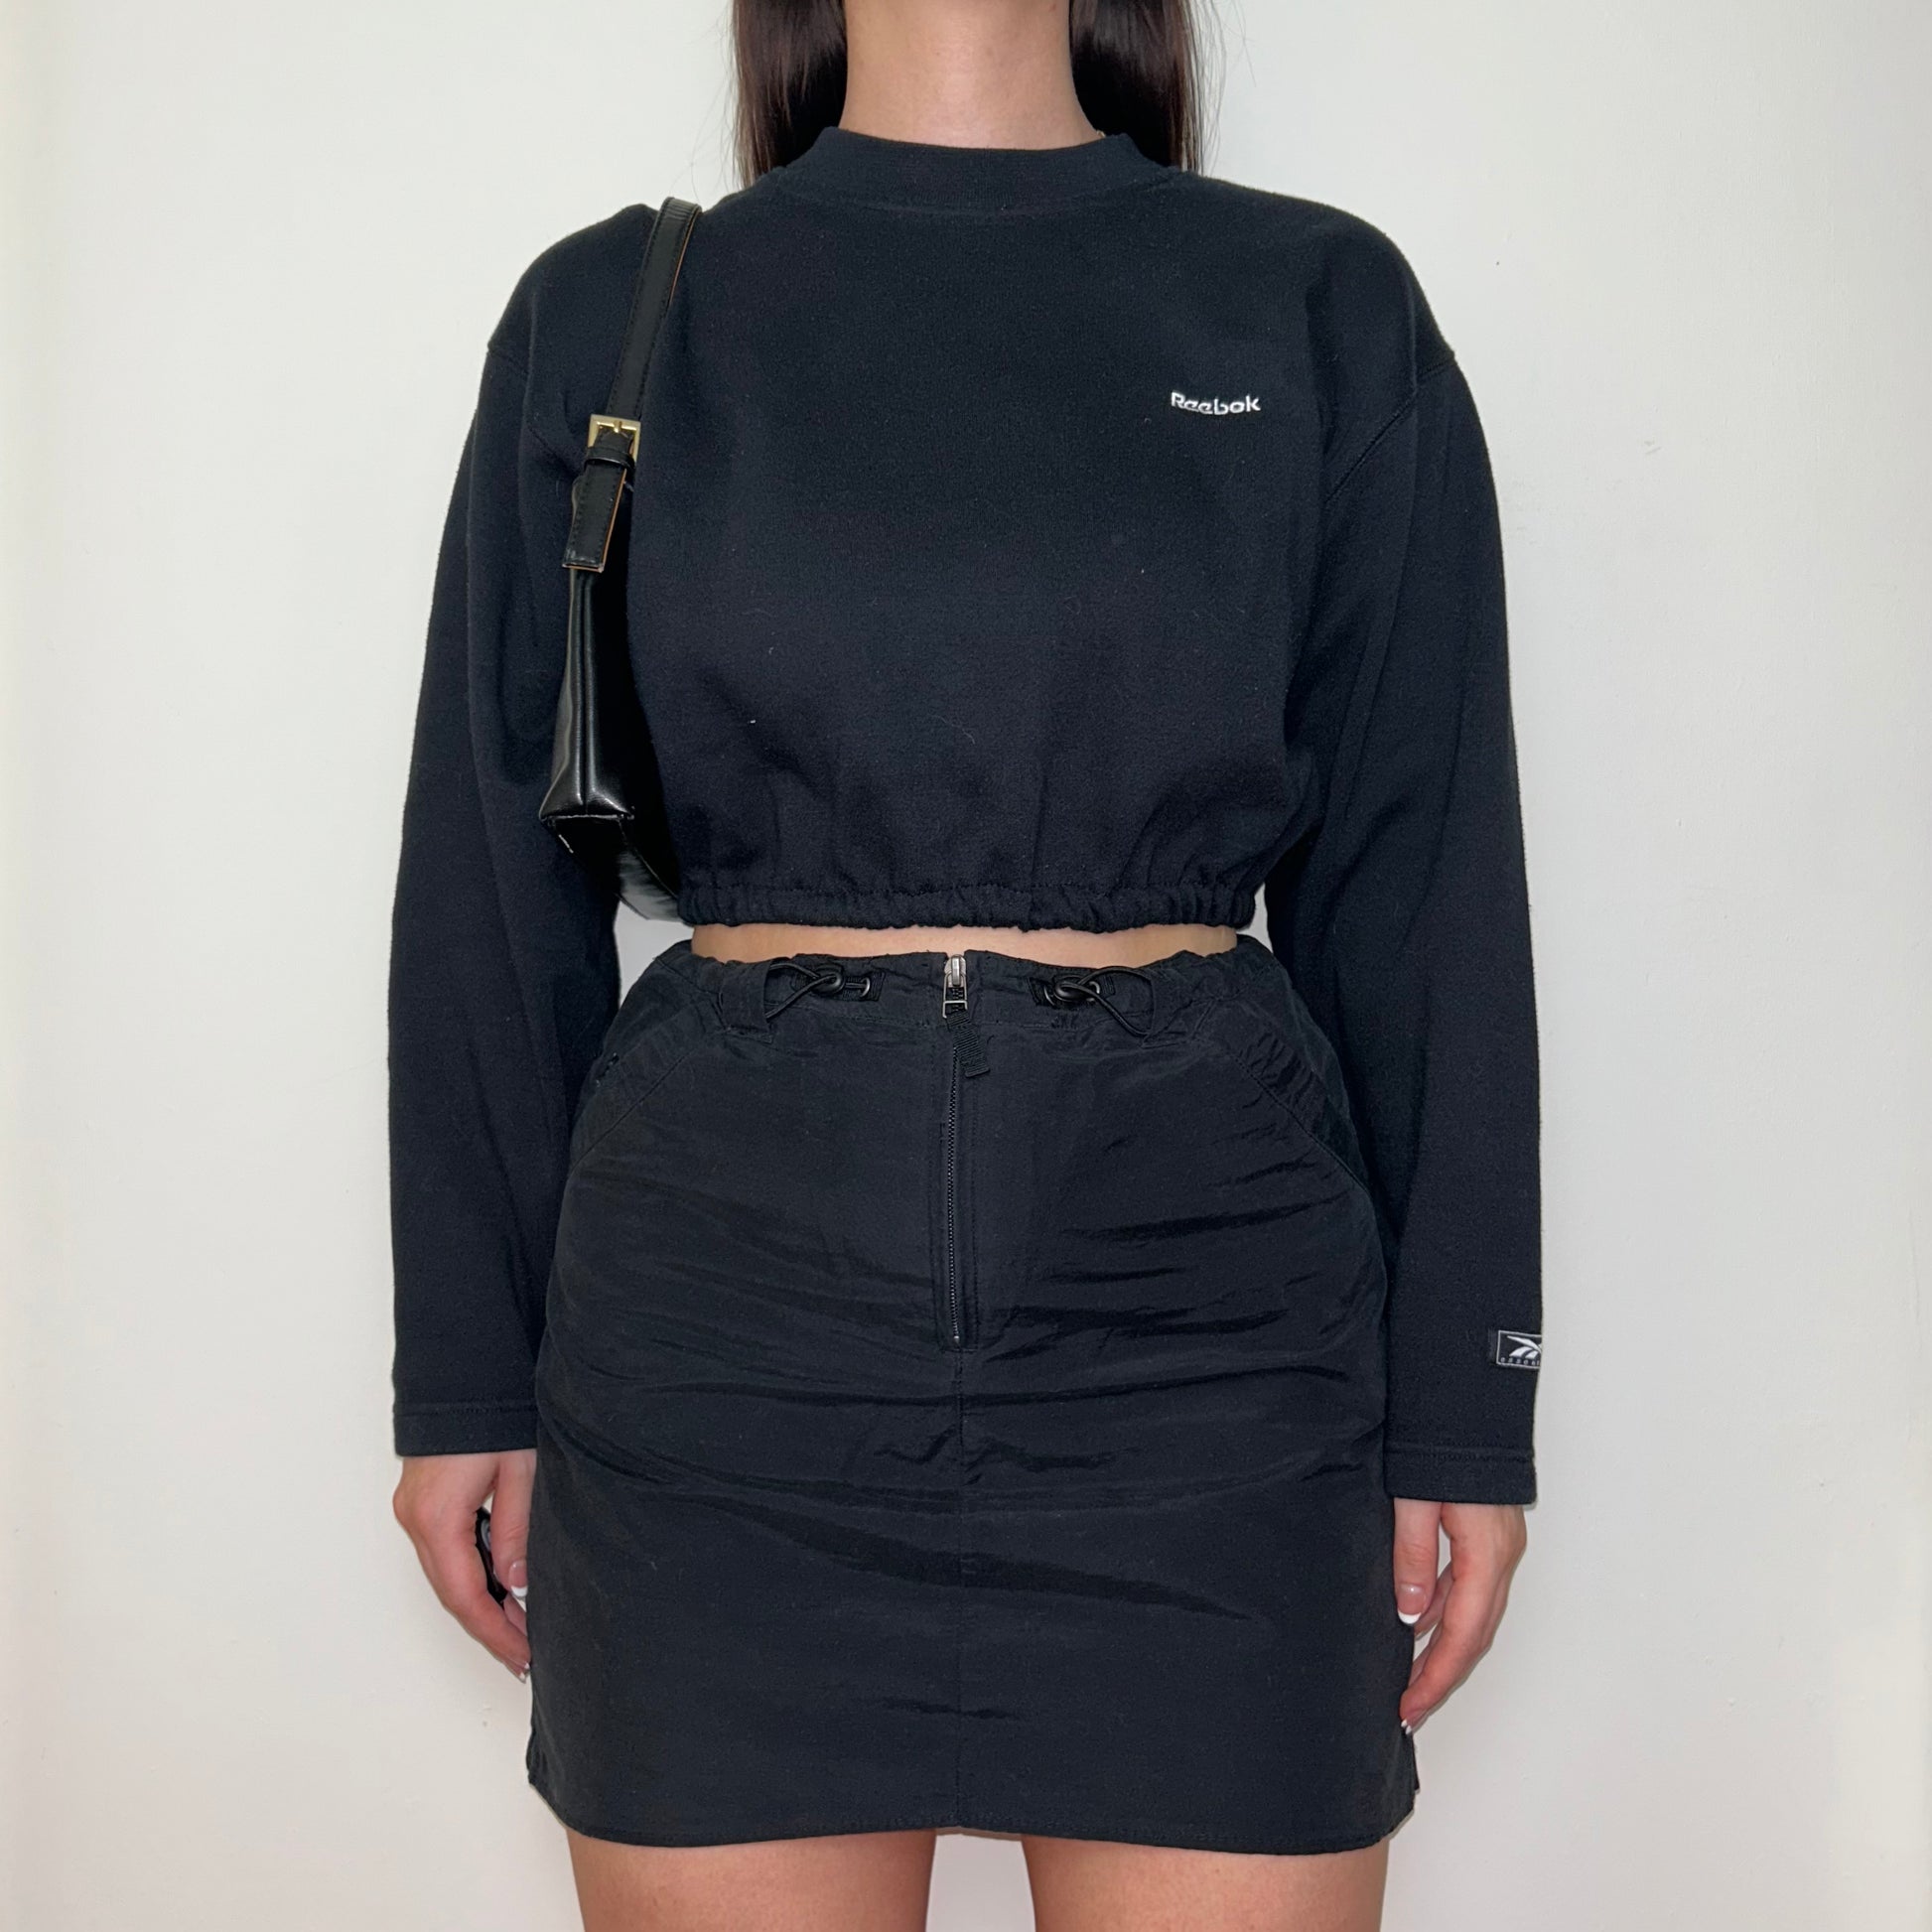 black cropped sweatshirt with white reebok logo shown on a model wearing a black mini skirt and black shoulder bag